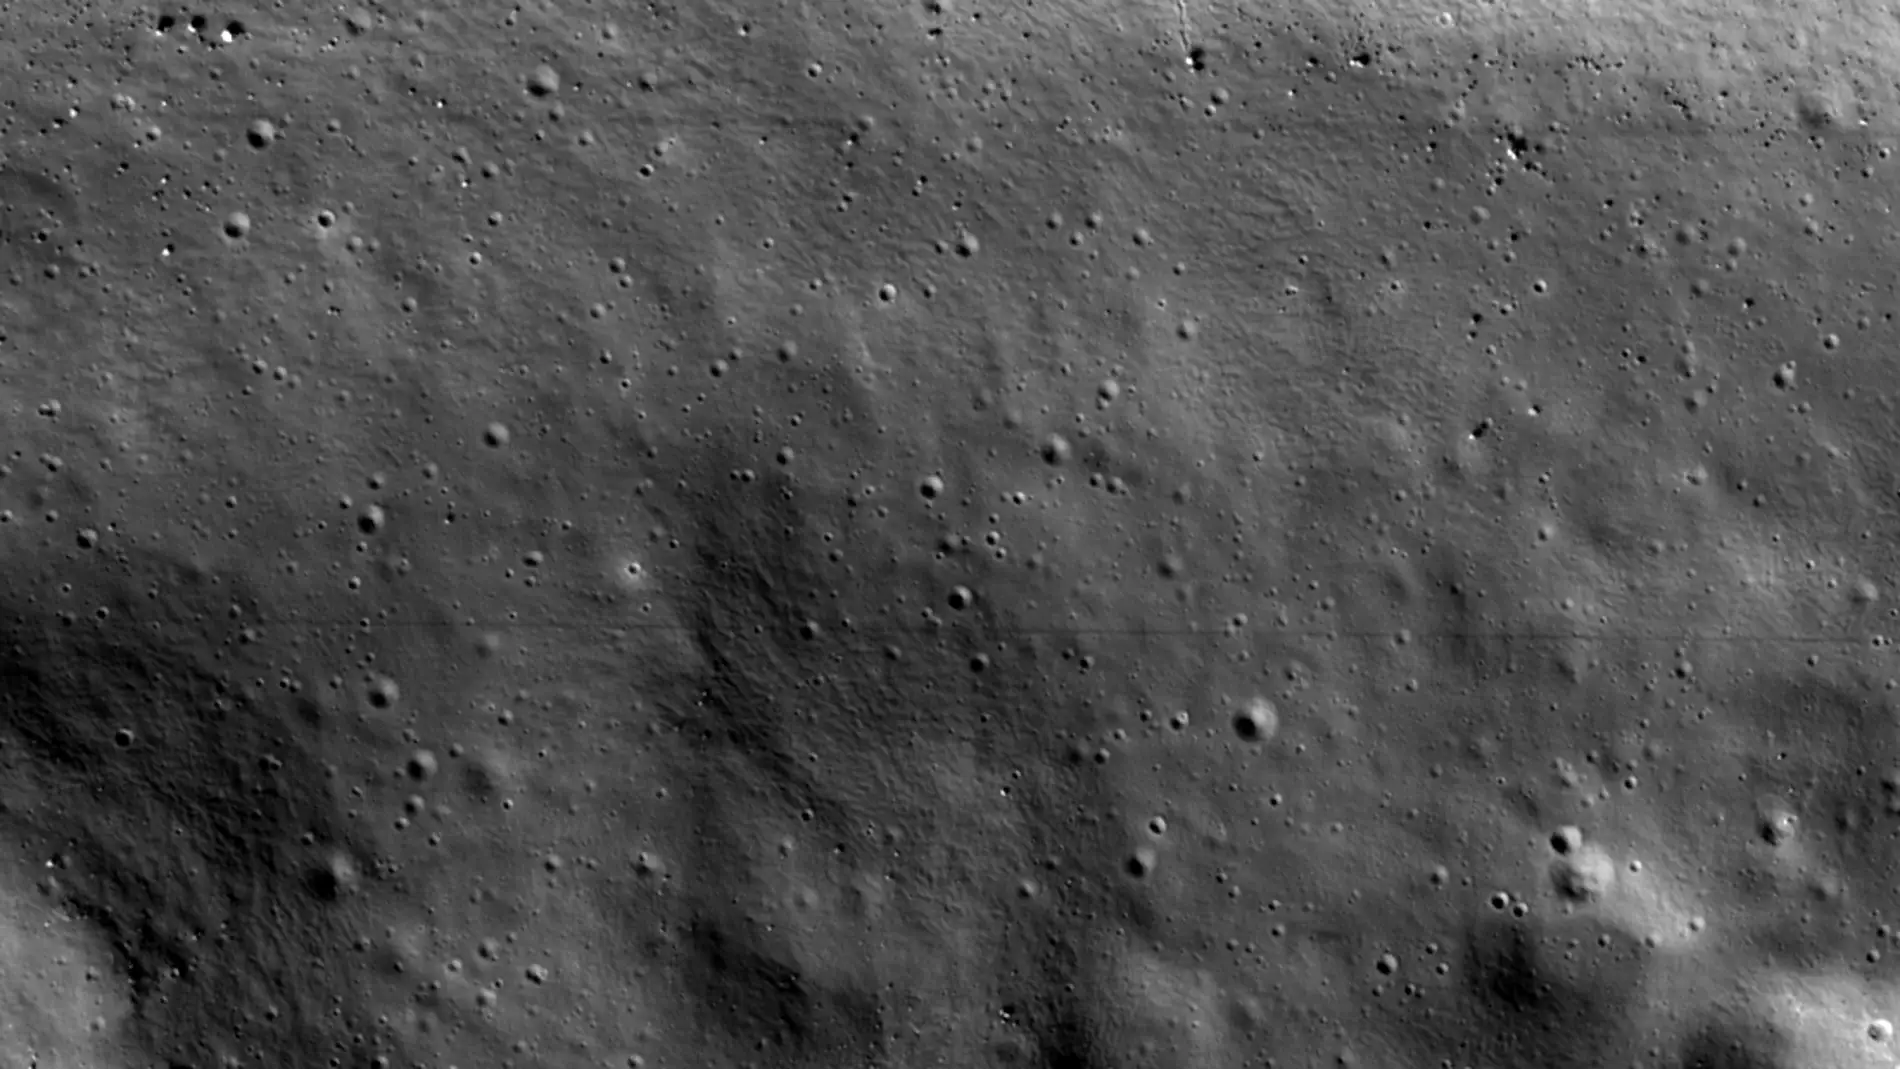 Superficie lunar en la cara oculta del satélite